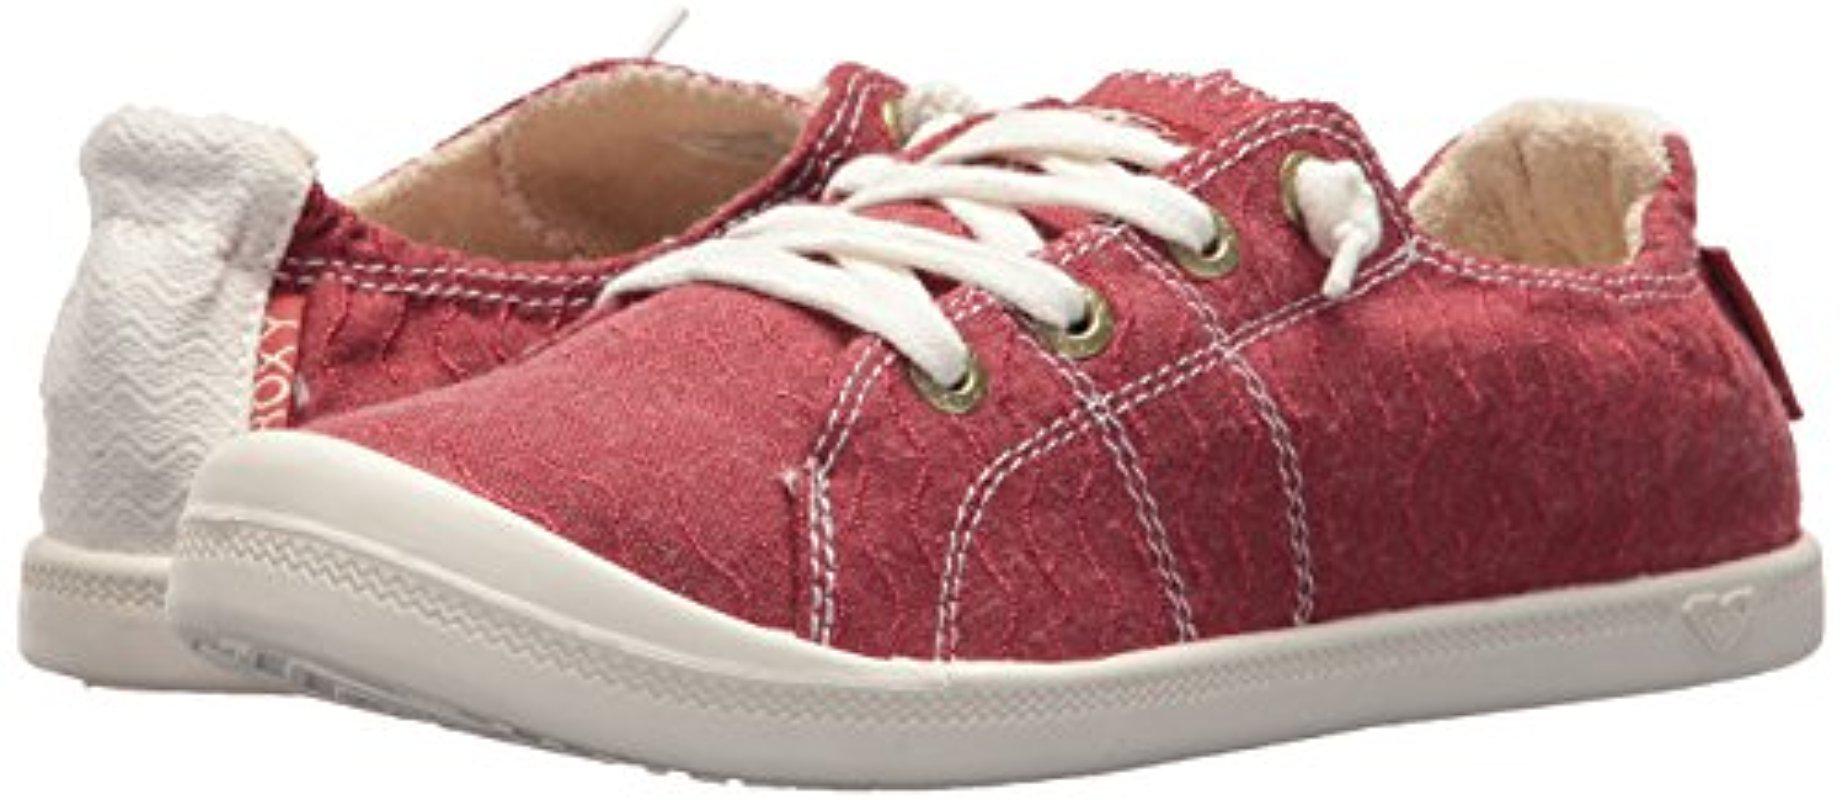 Bayshore Slip On Shoe Sneaker in Red 